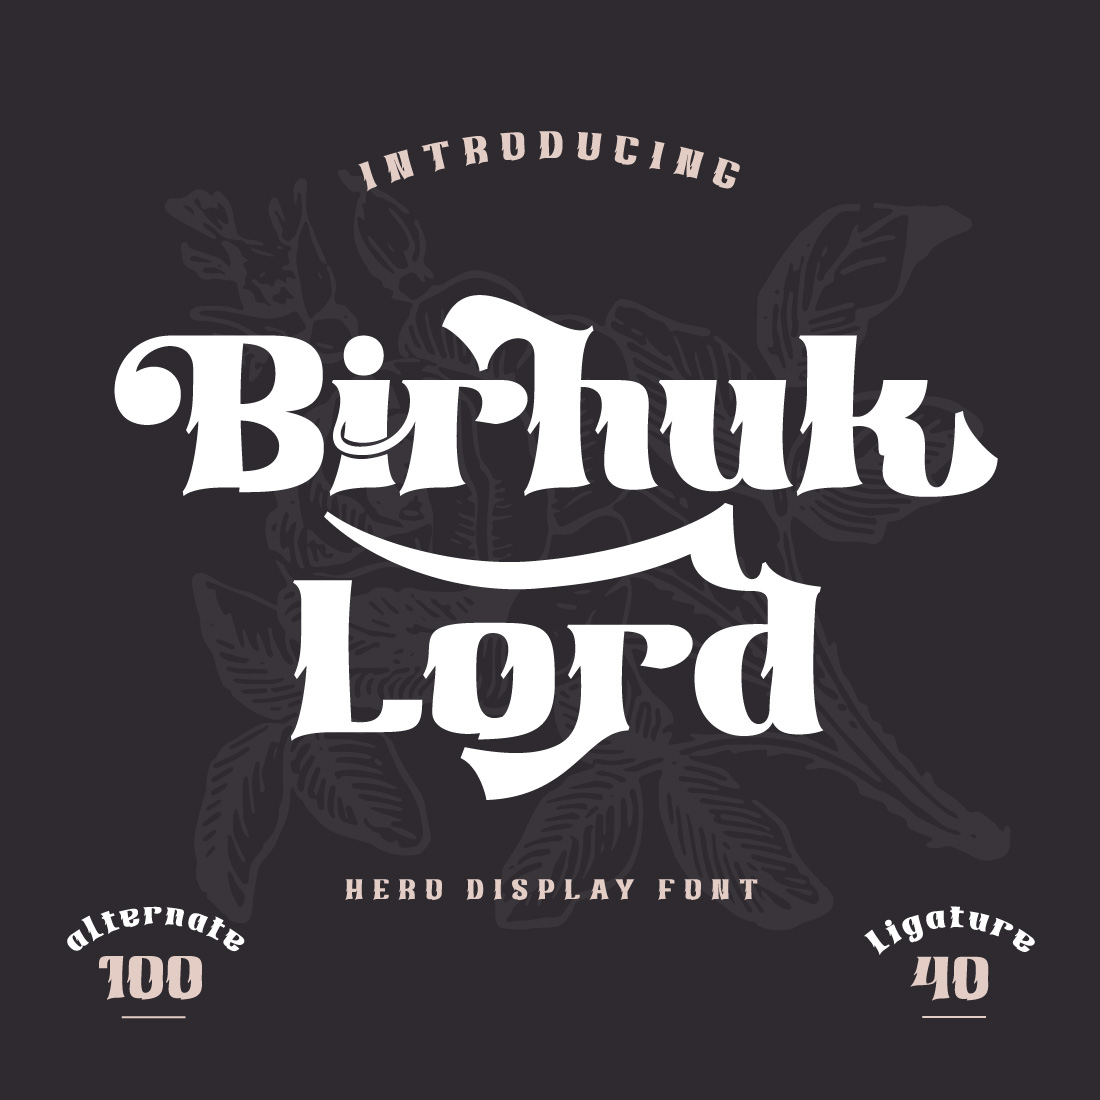 Birhuk Lord | Display Hero Font cover image.